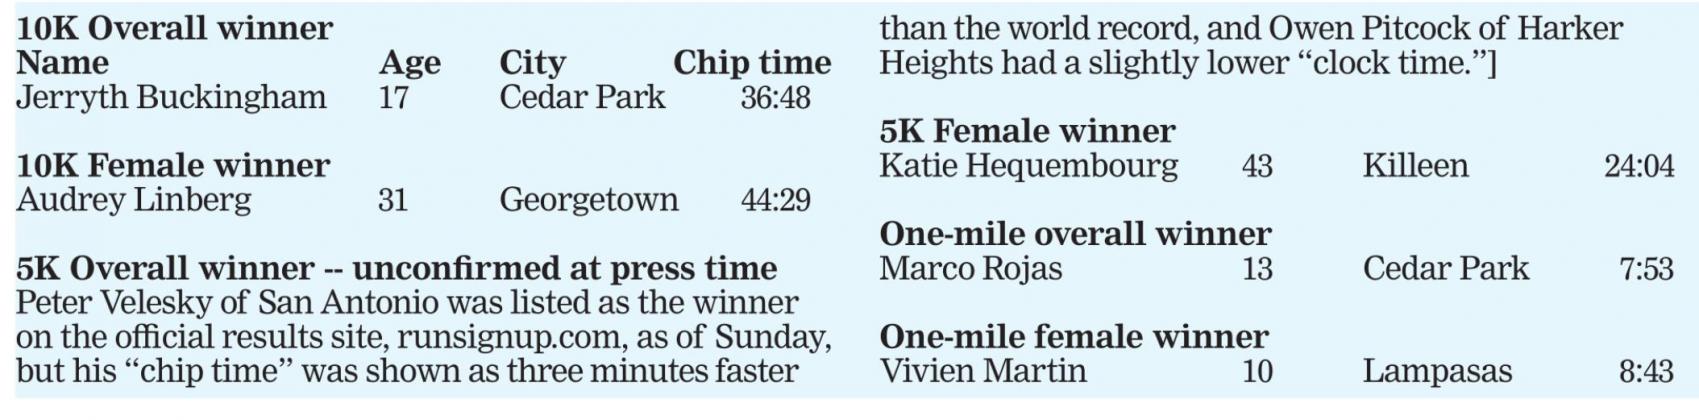 10K winner defends title; Lampasas girl tops female one-mile race